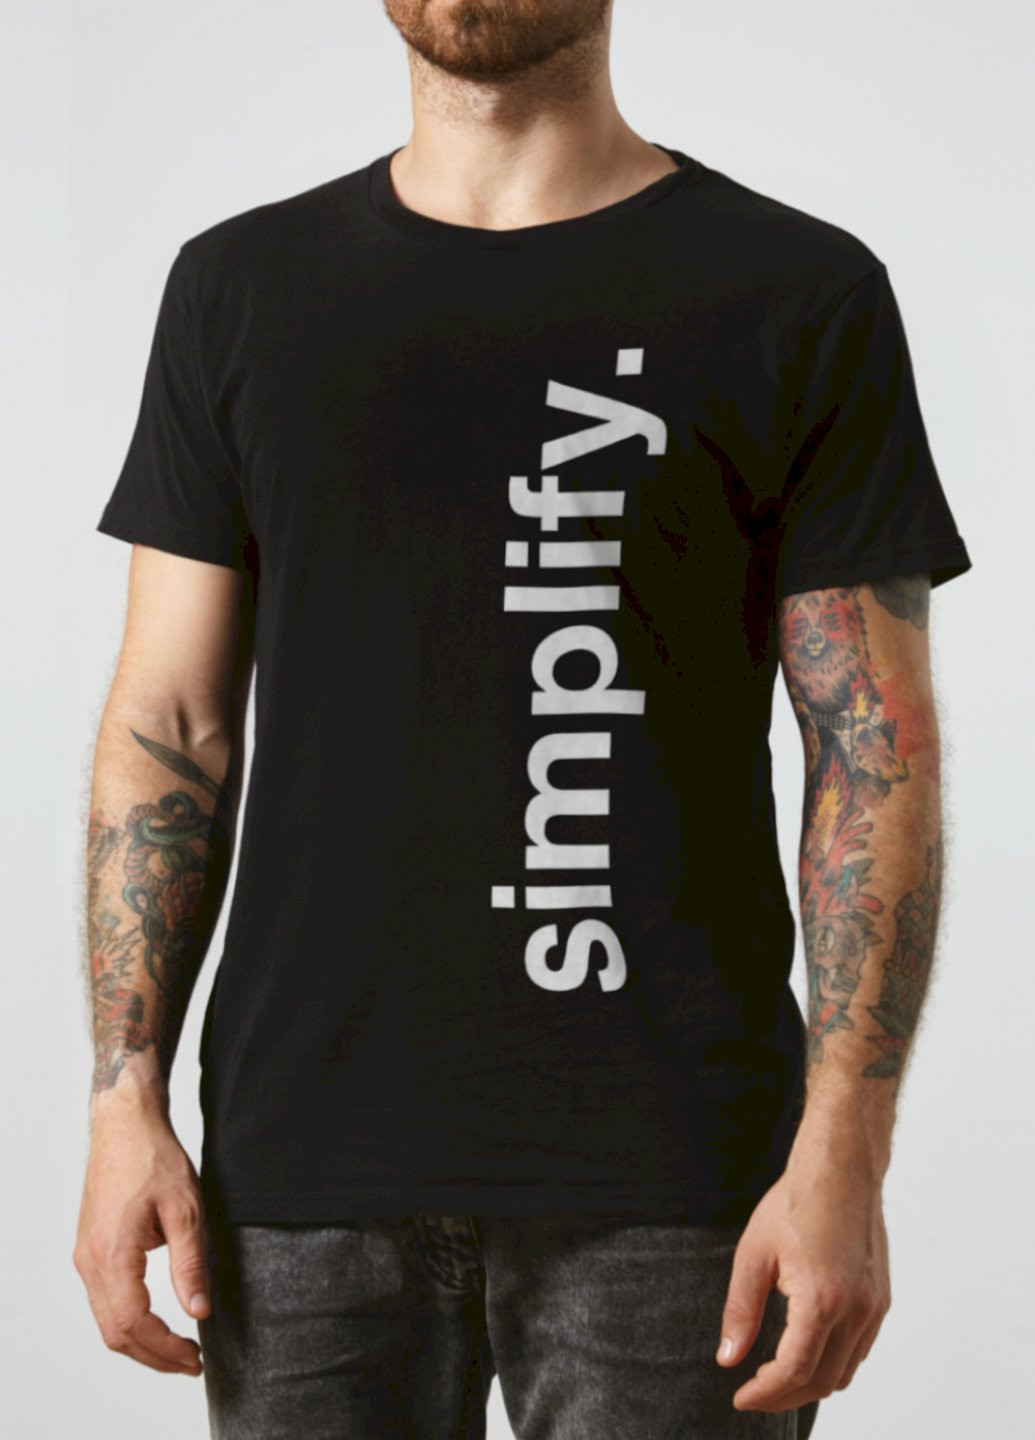 Черная футболка "simplify" Ctrl+